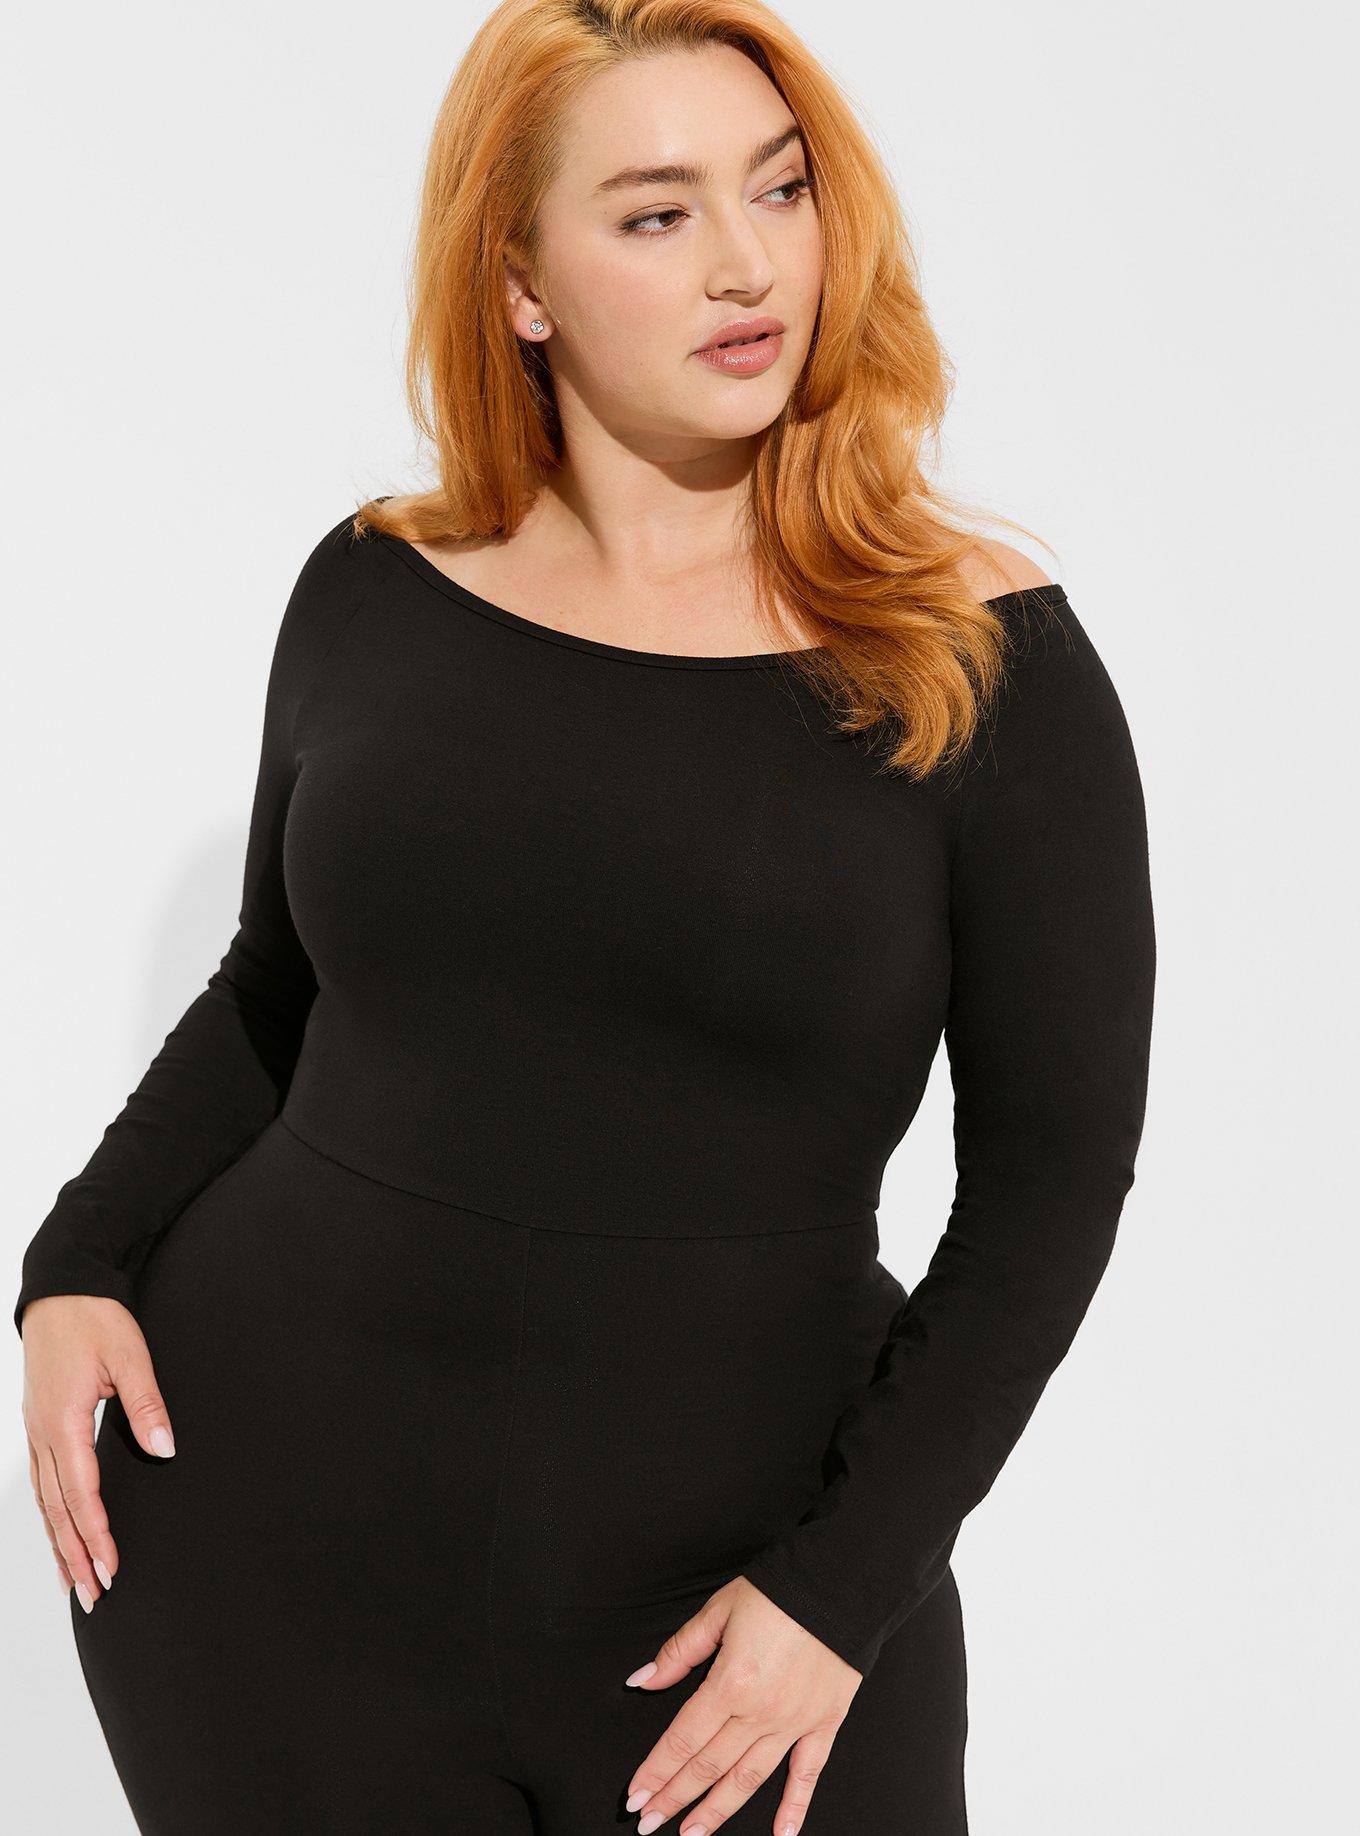 Fashion Off Shoulder 3/4 Sleeve Women Bodysuit Plus Size Black